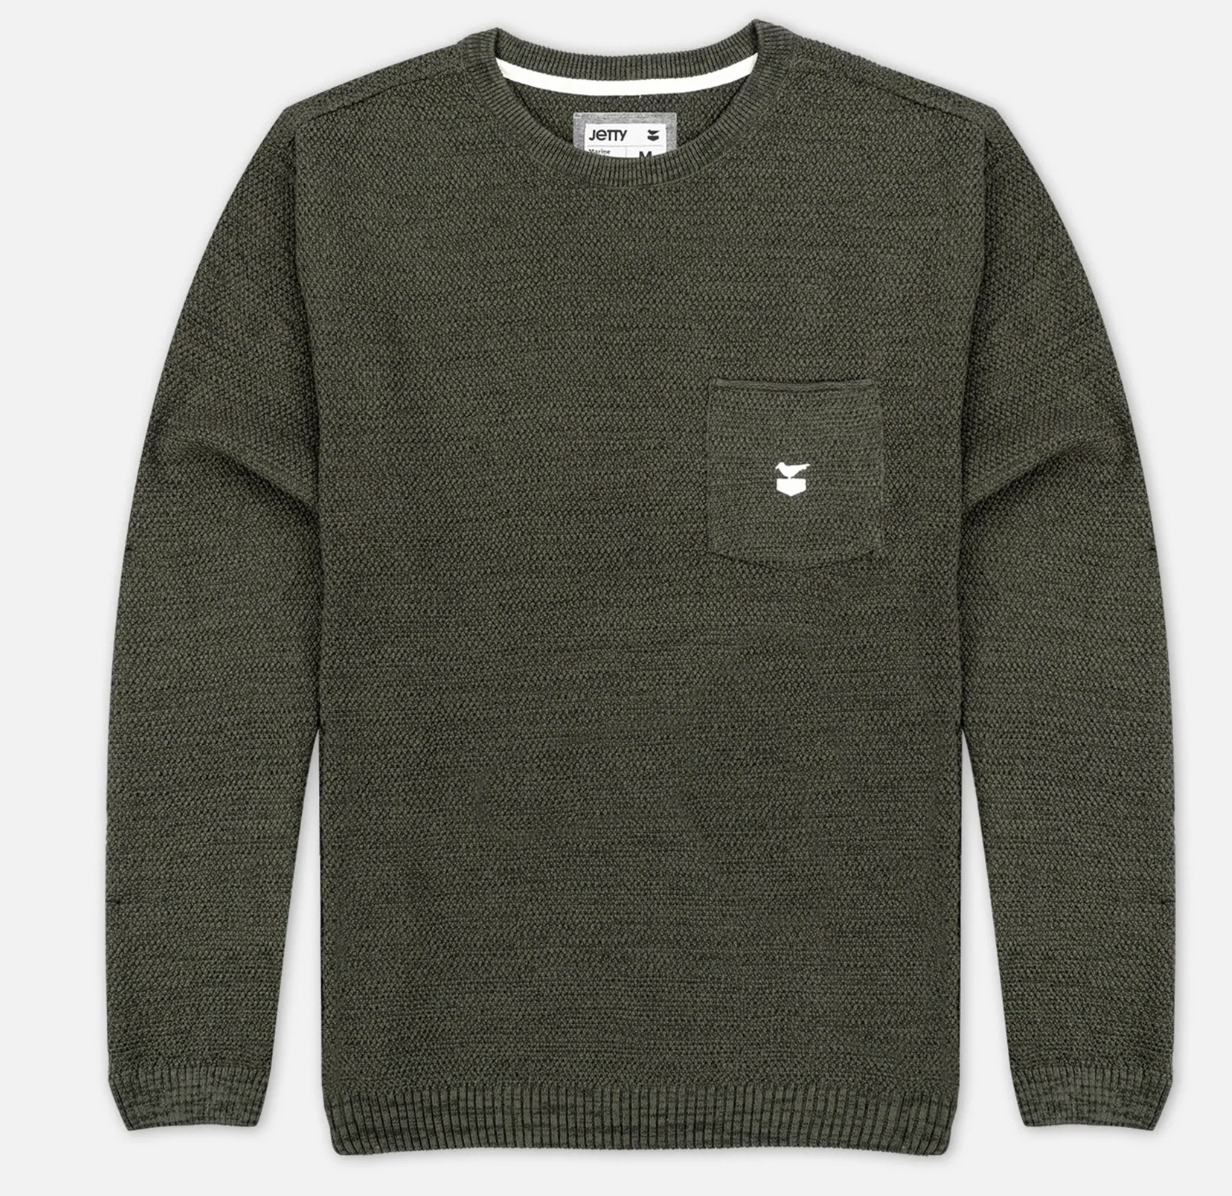 Jetty M's Brine Sweater